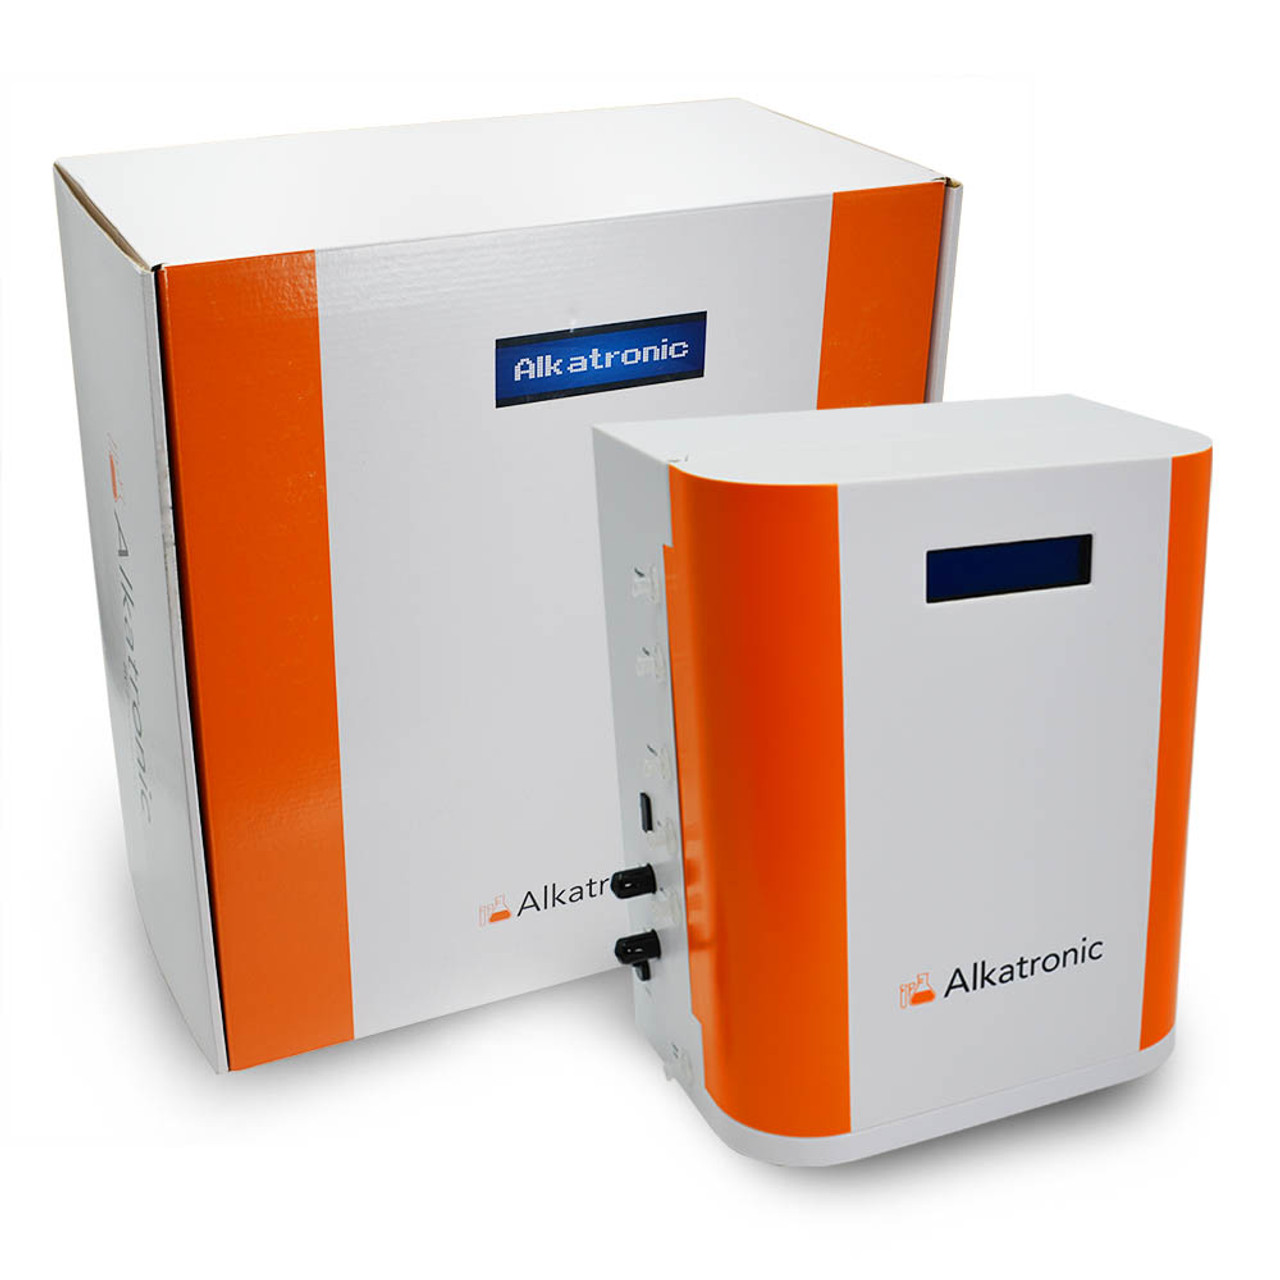 Alkatronic Alkalinity Controller (Batch 3) - Focustronic